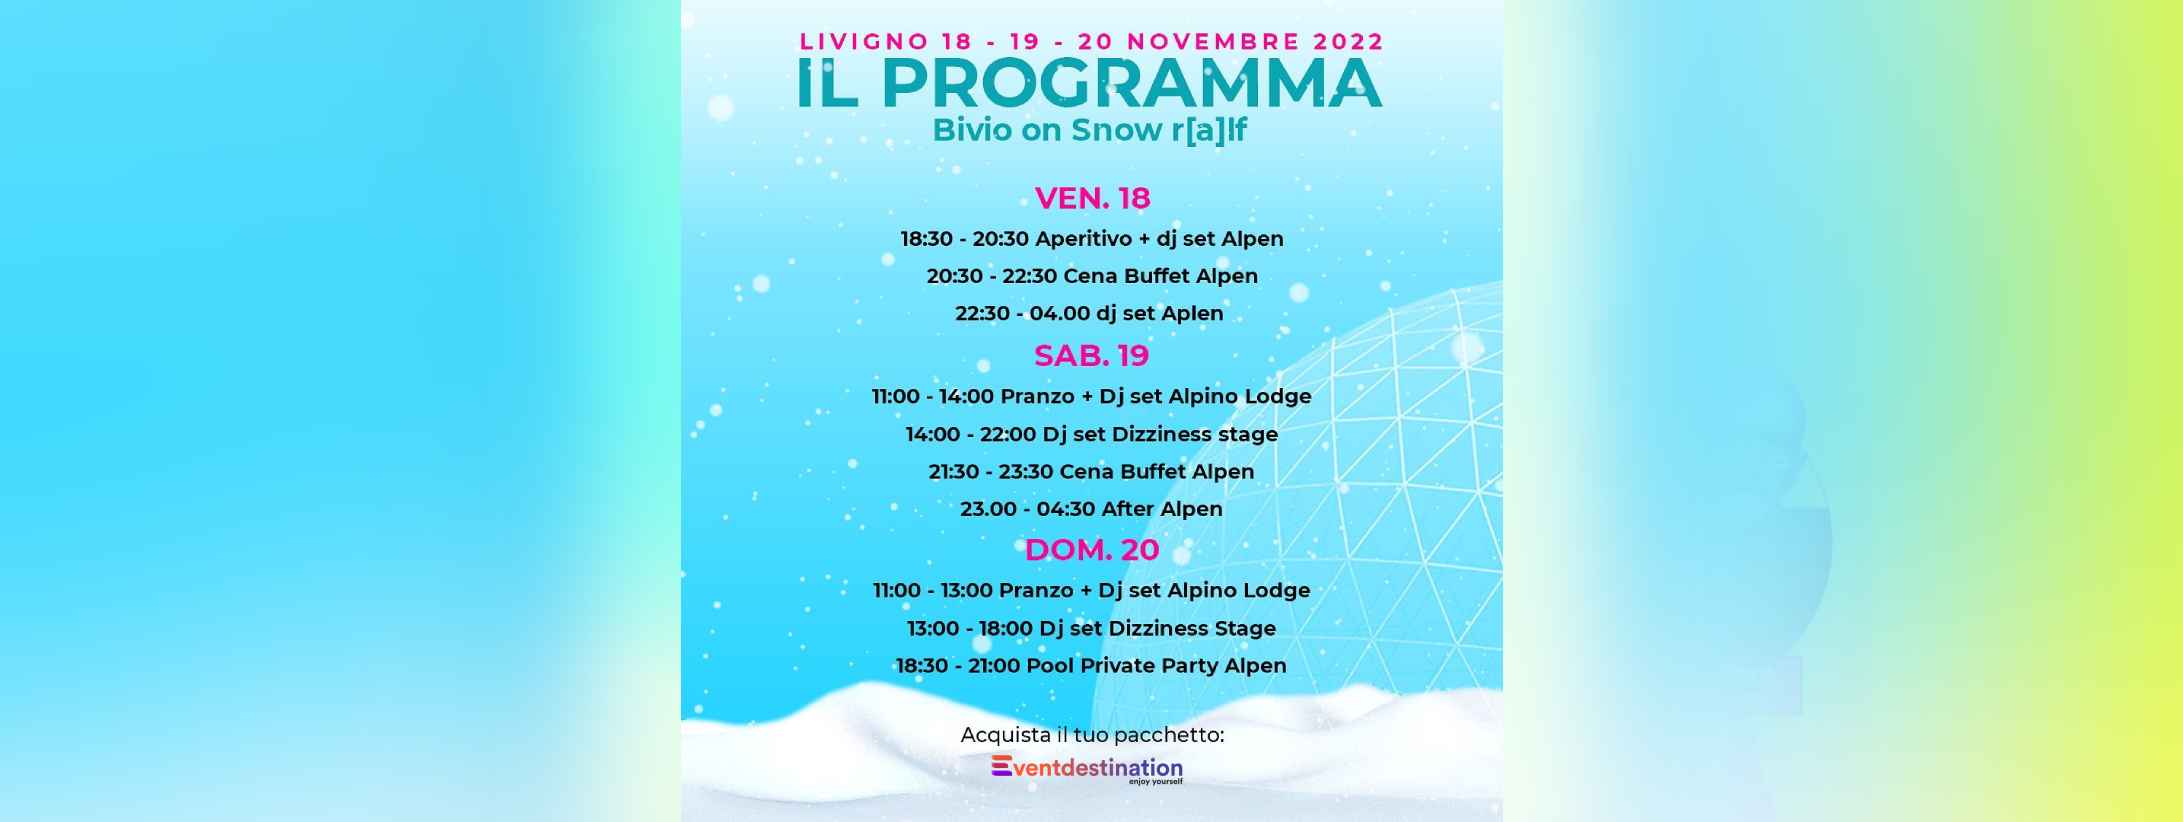 Programma Bivio on the Snow